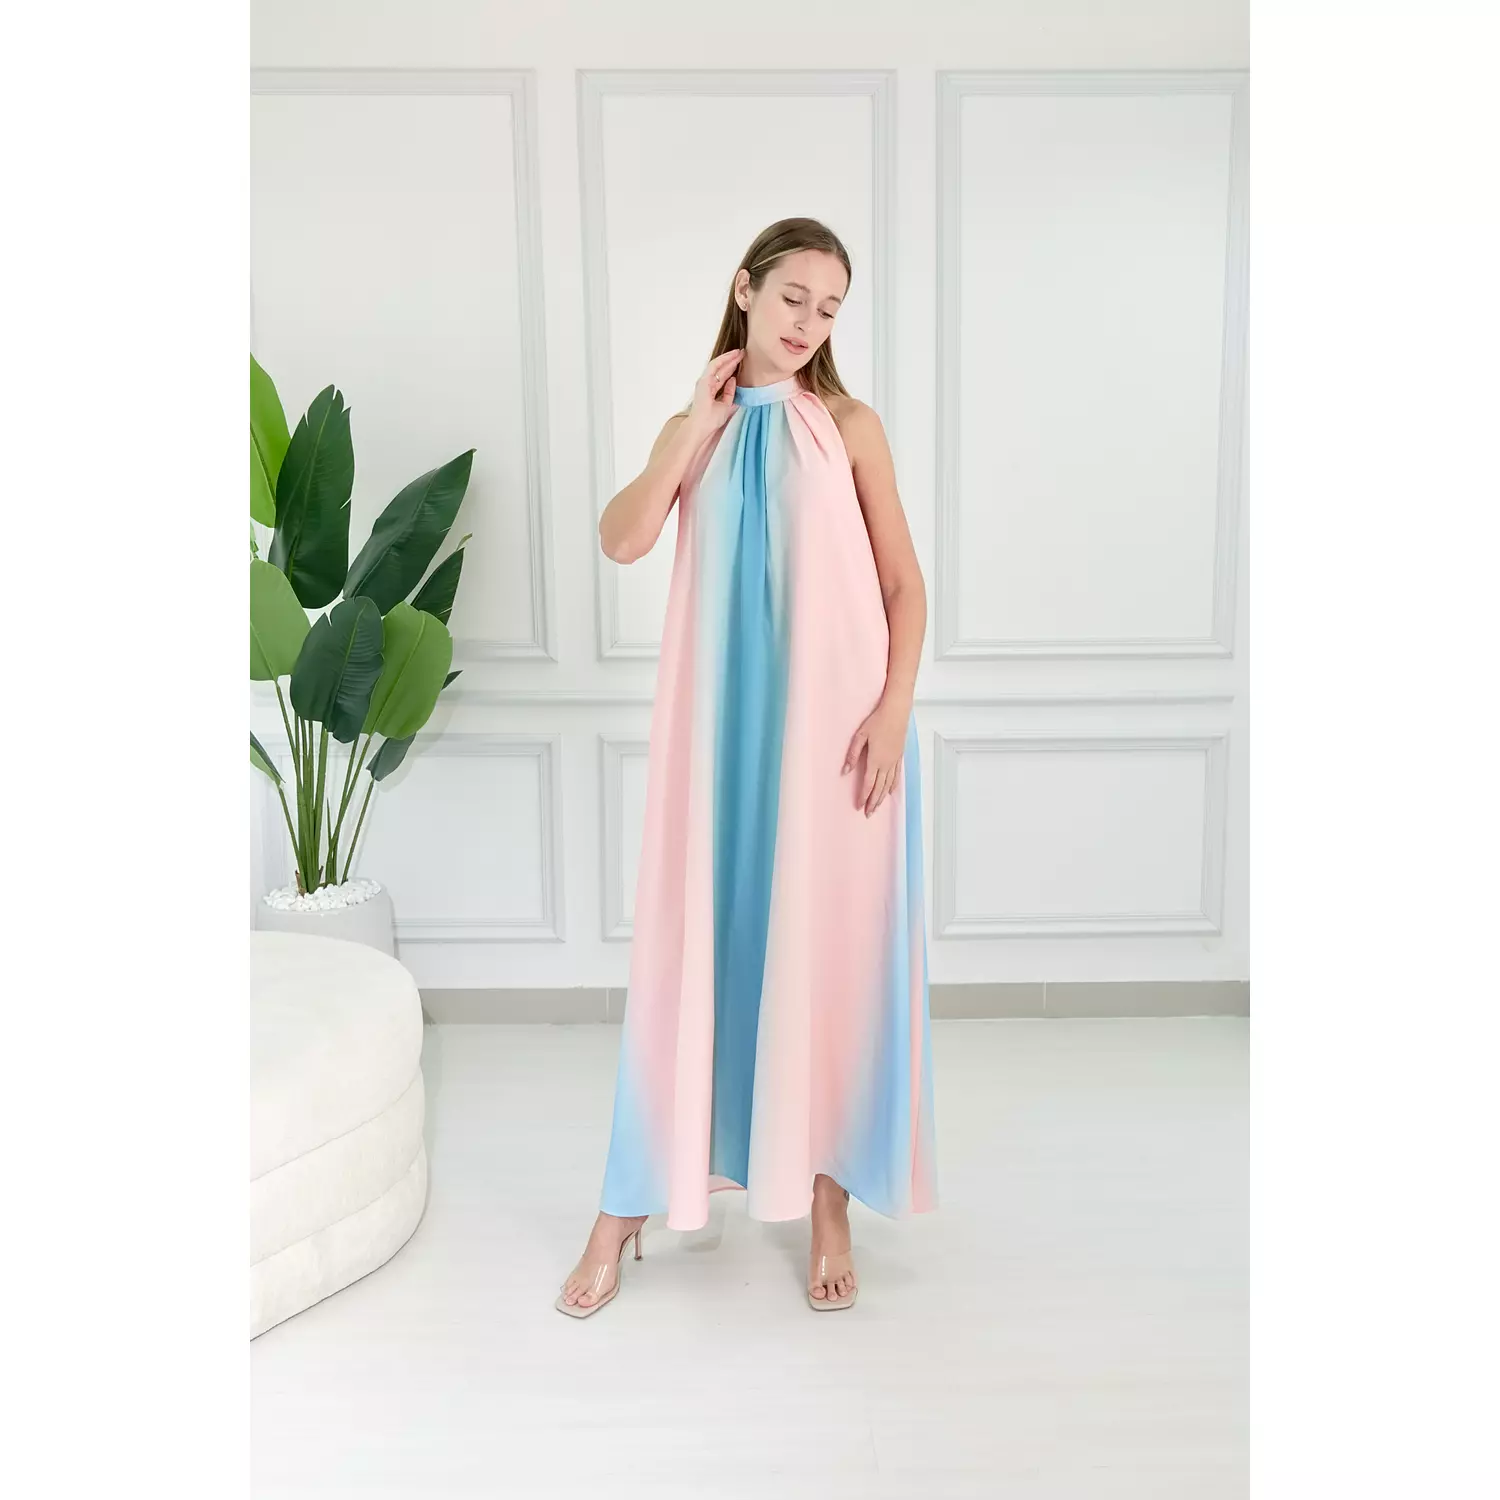 Colorful Sleeveless Dress 4